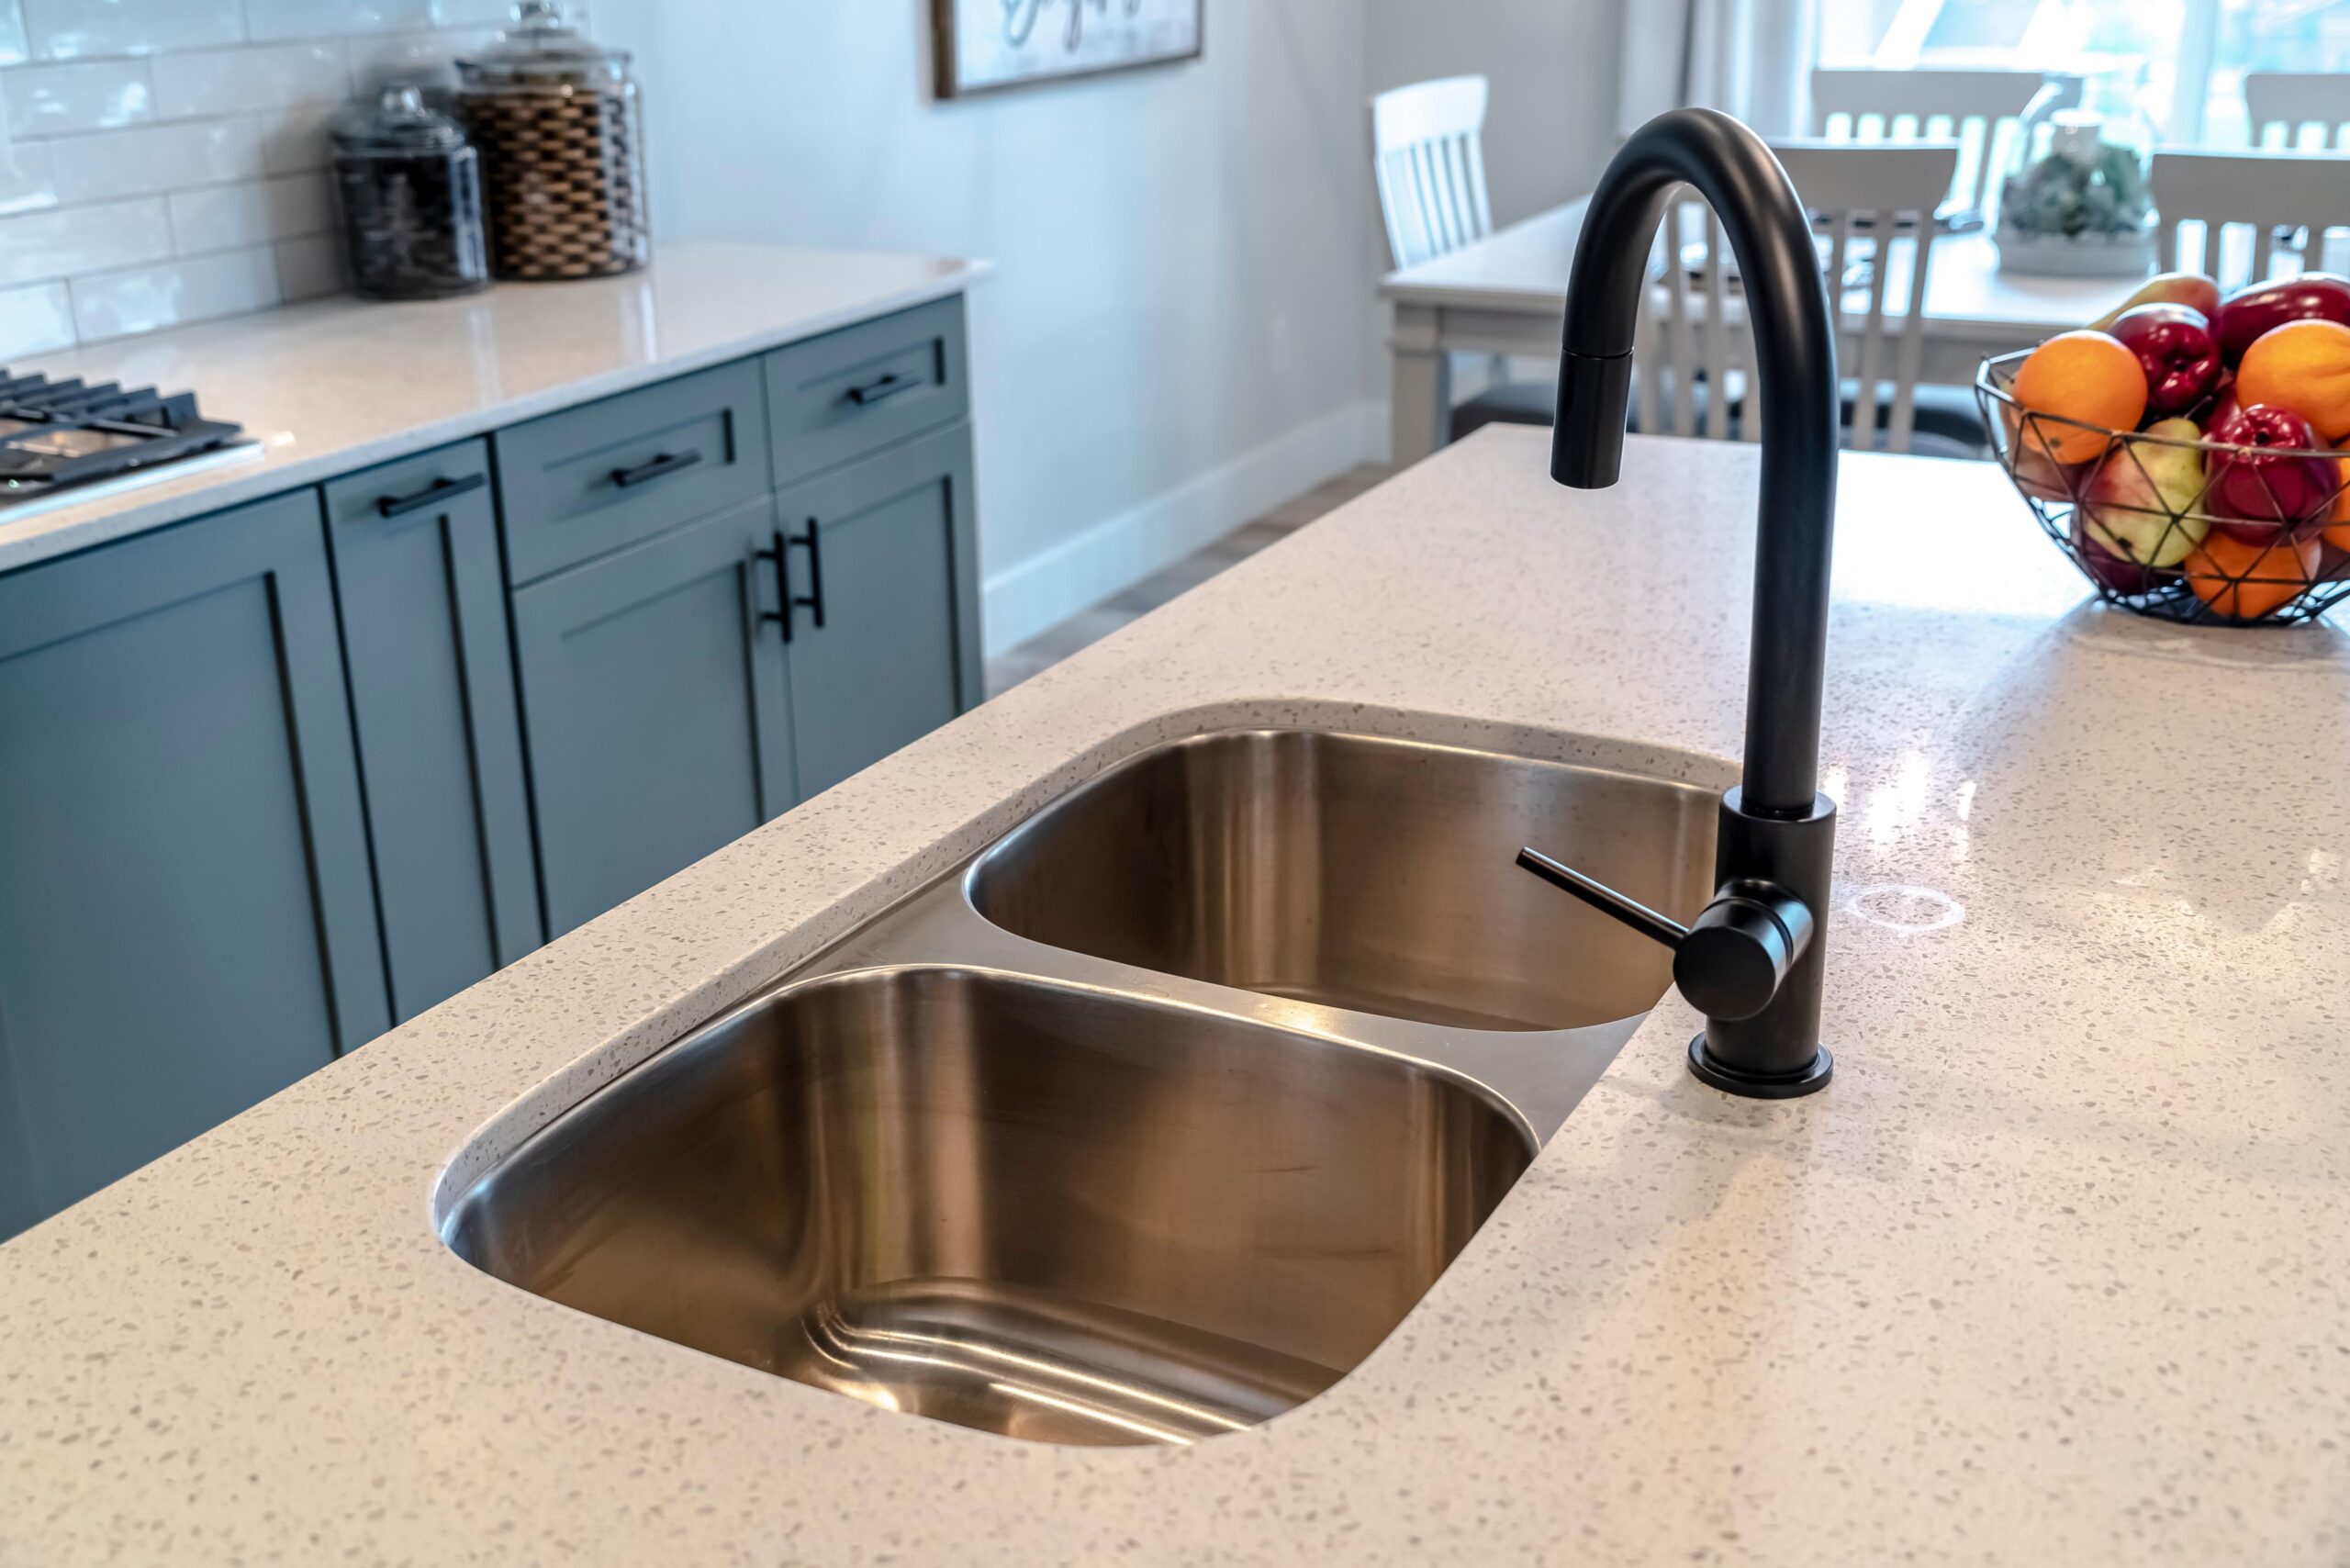 How to Attach Undermount Sink to Granite